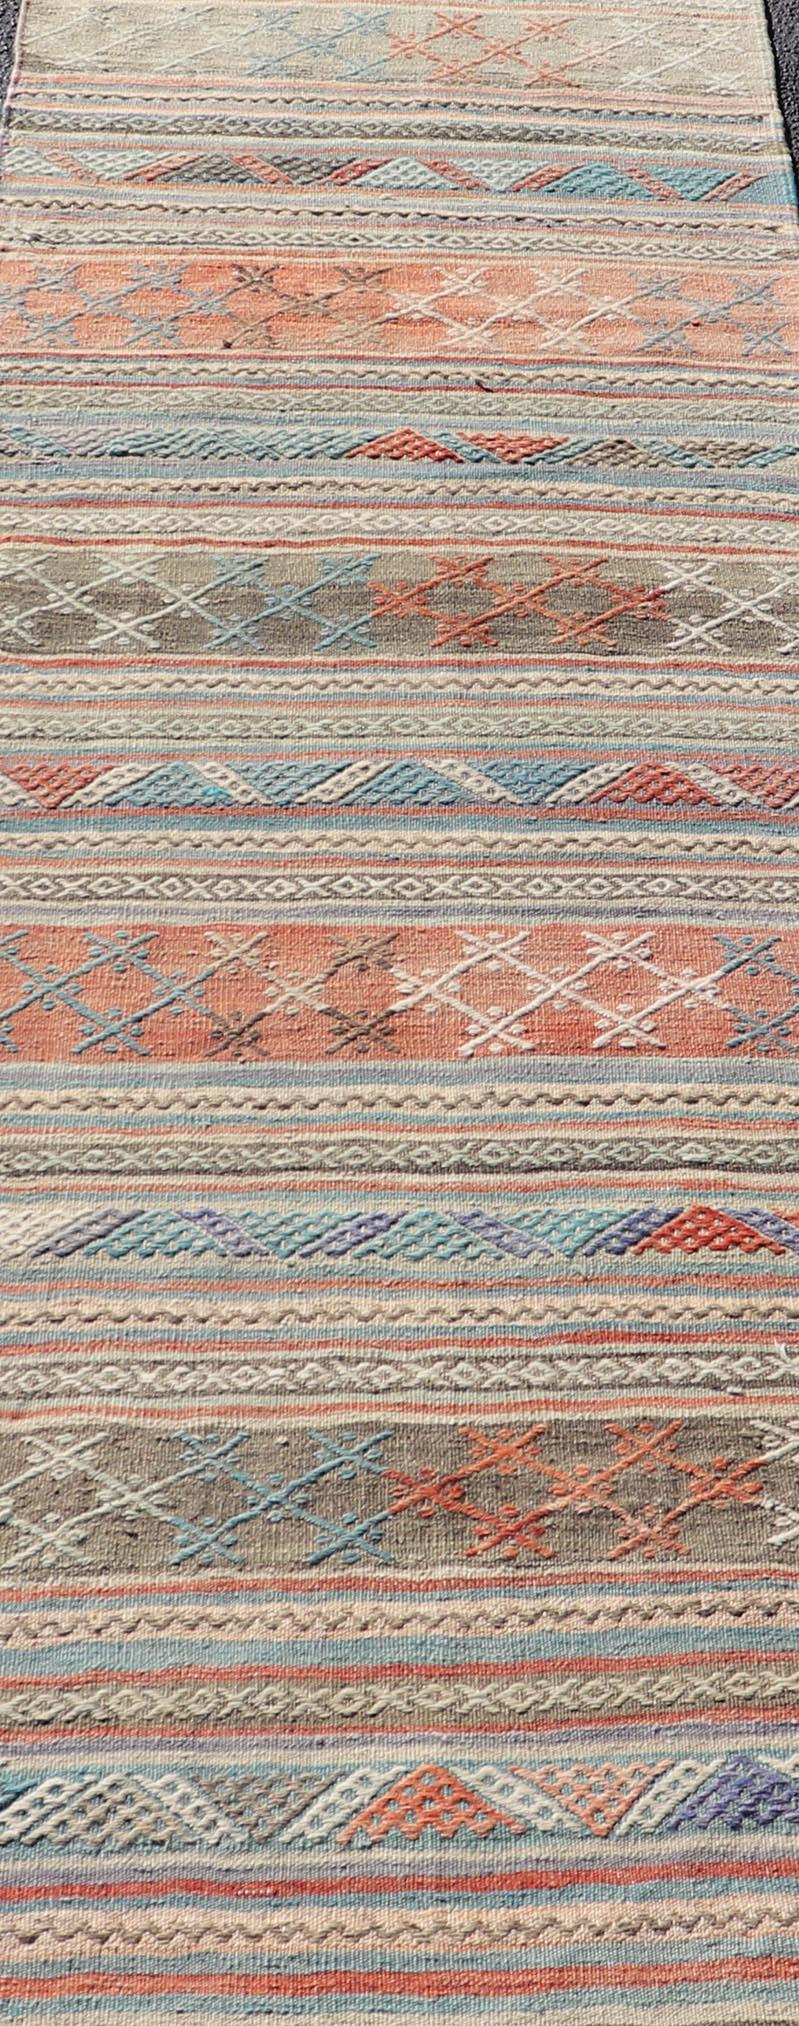 Vintage Turkish Colorful Kilim Runner with Stripe Design in Tan and Orange's In Good Condition For Sale In Atlanta, GA